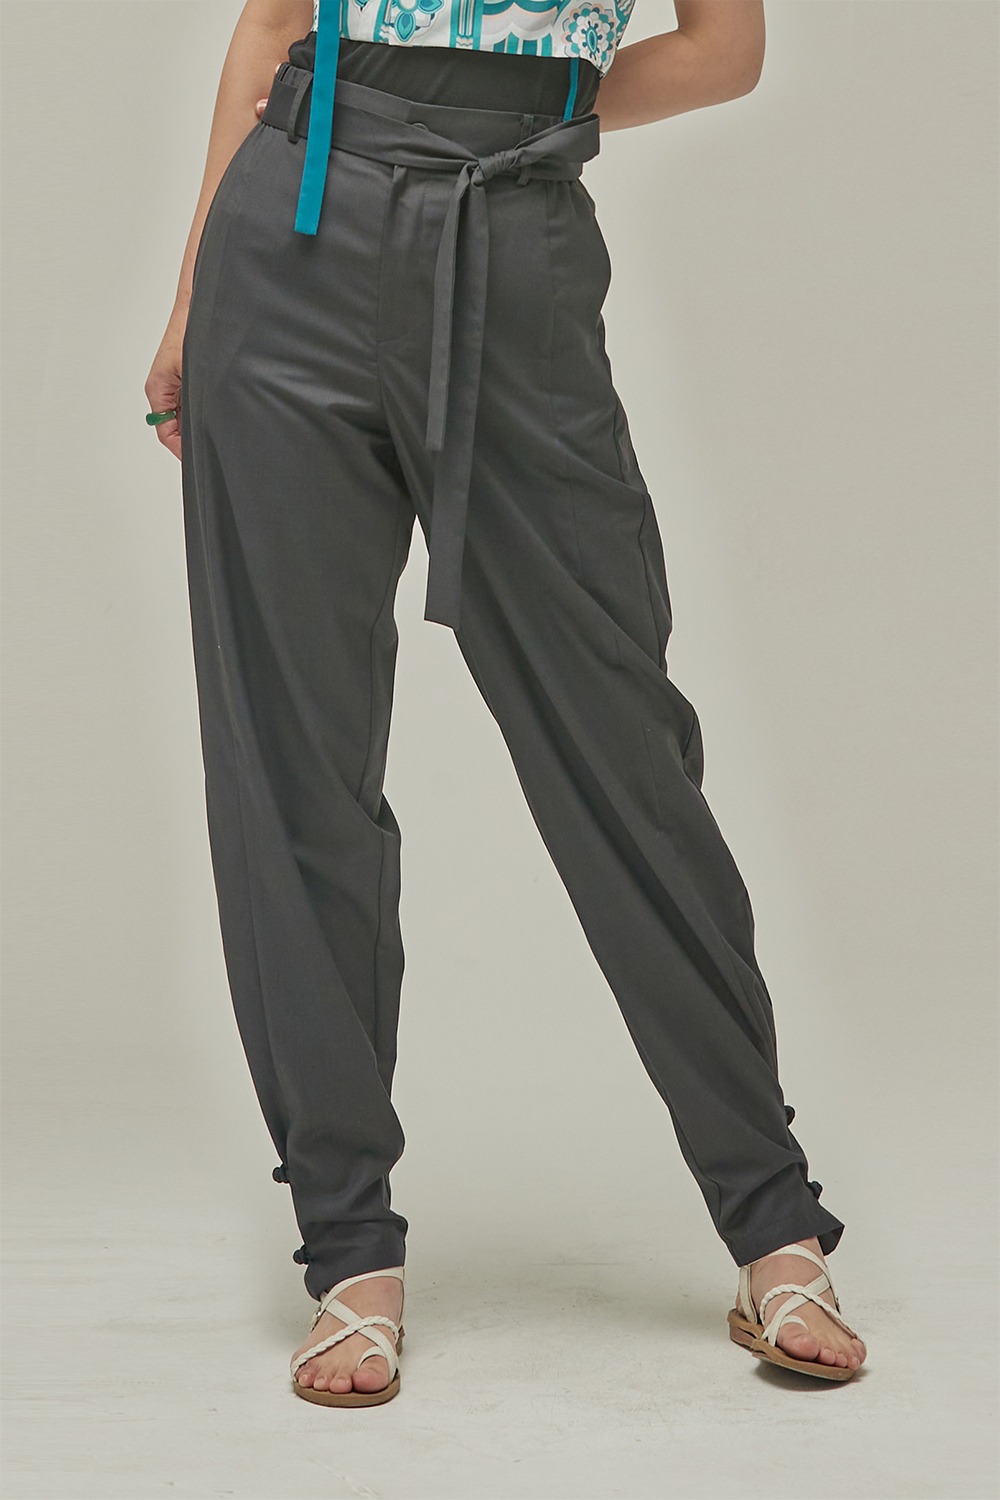 Classic Maru Hanbok Pants [Medium gray]